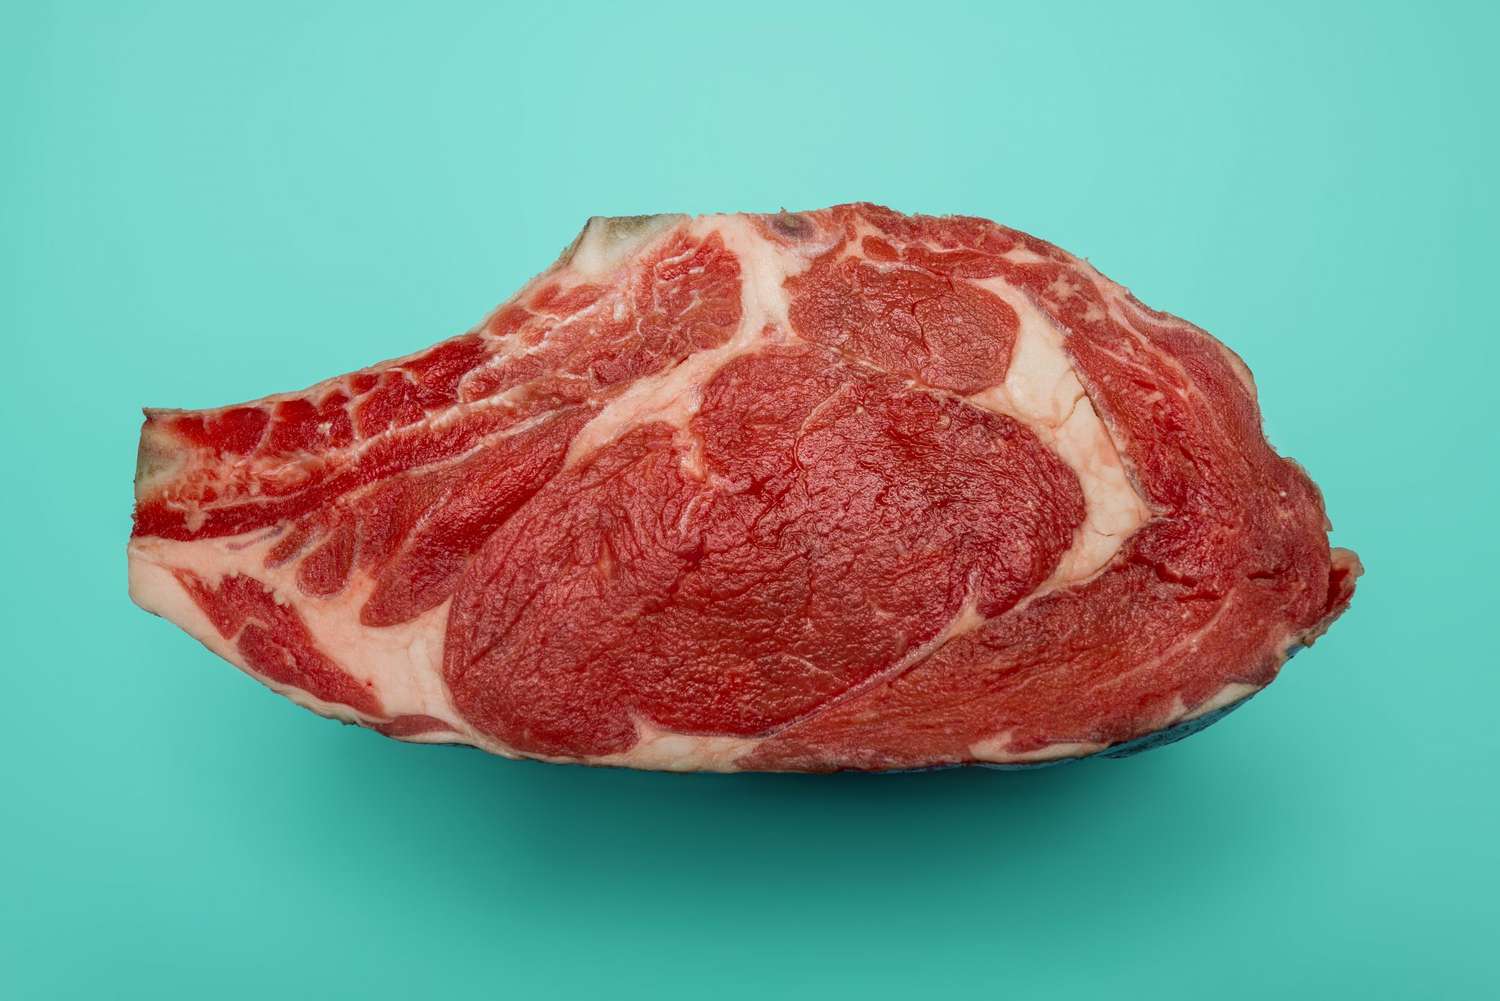 Raw steak on teal backdrop